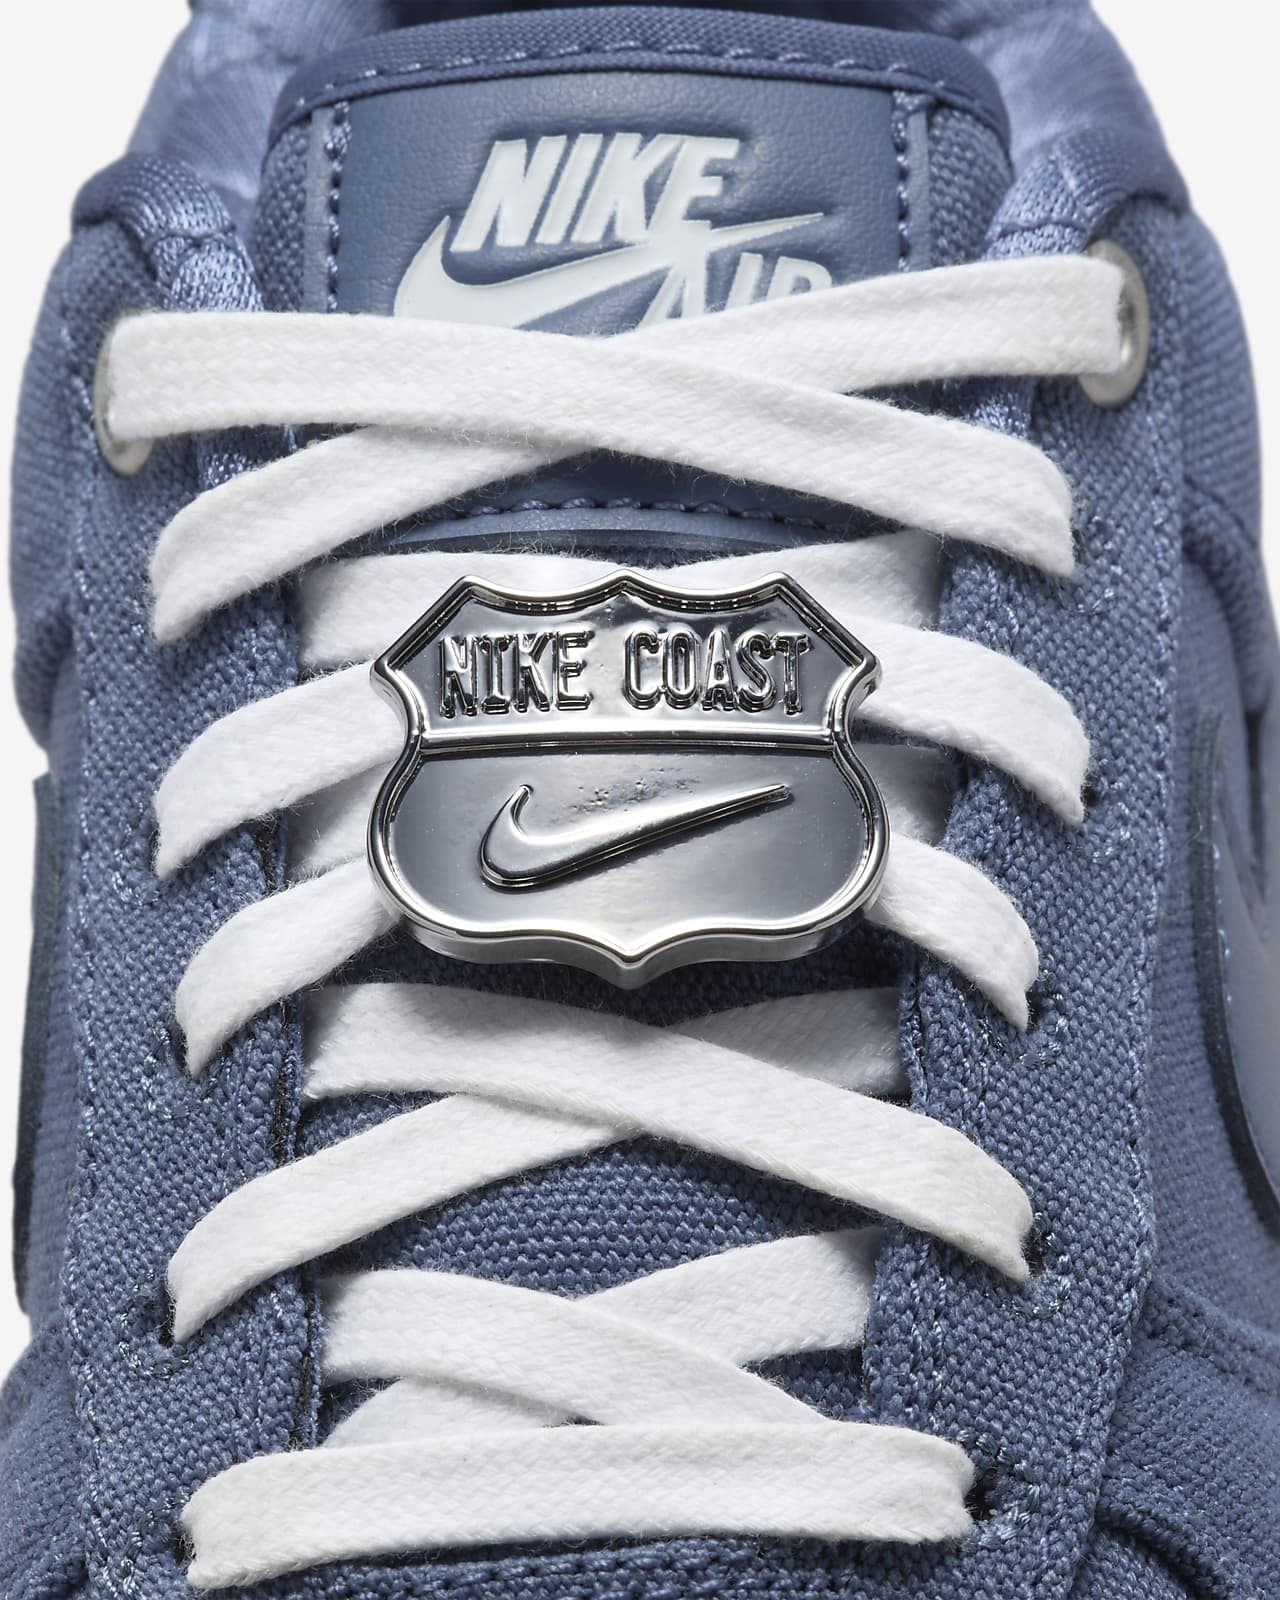 Nike off white af1  Nike shoes blue, Nike air shoes, Nike shoes outfits